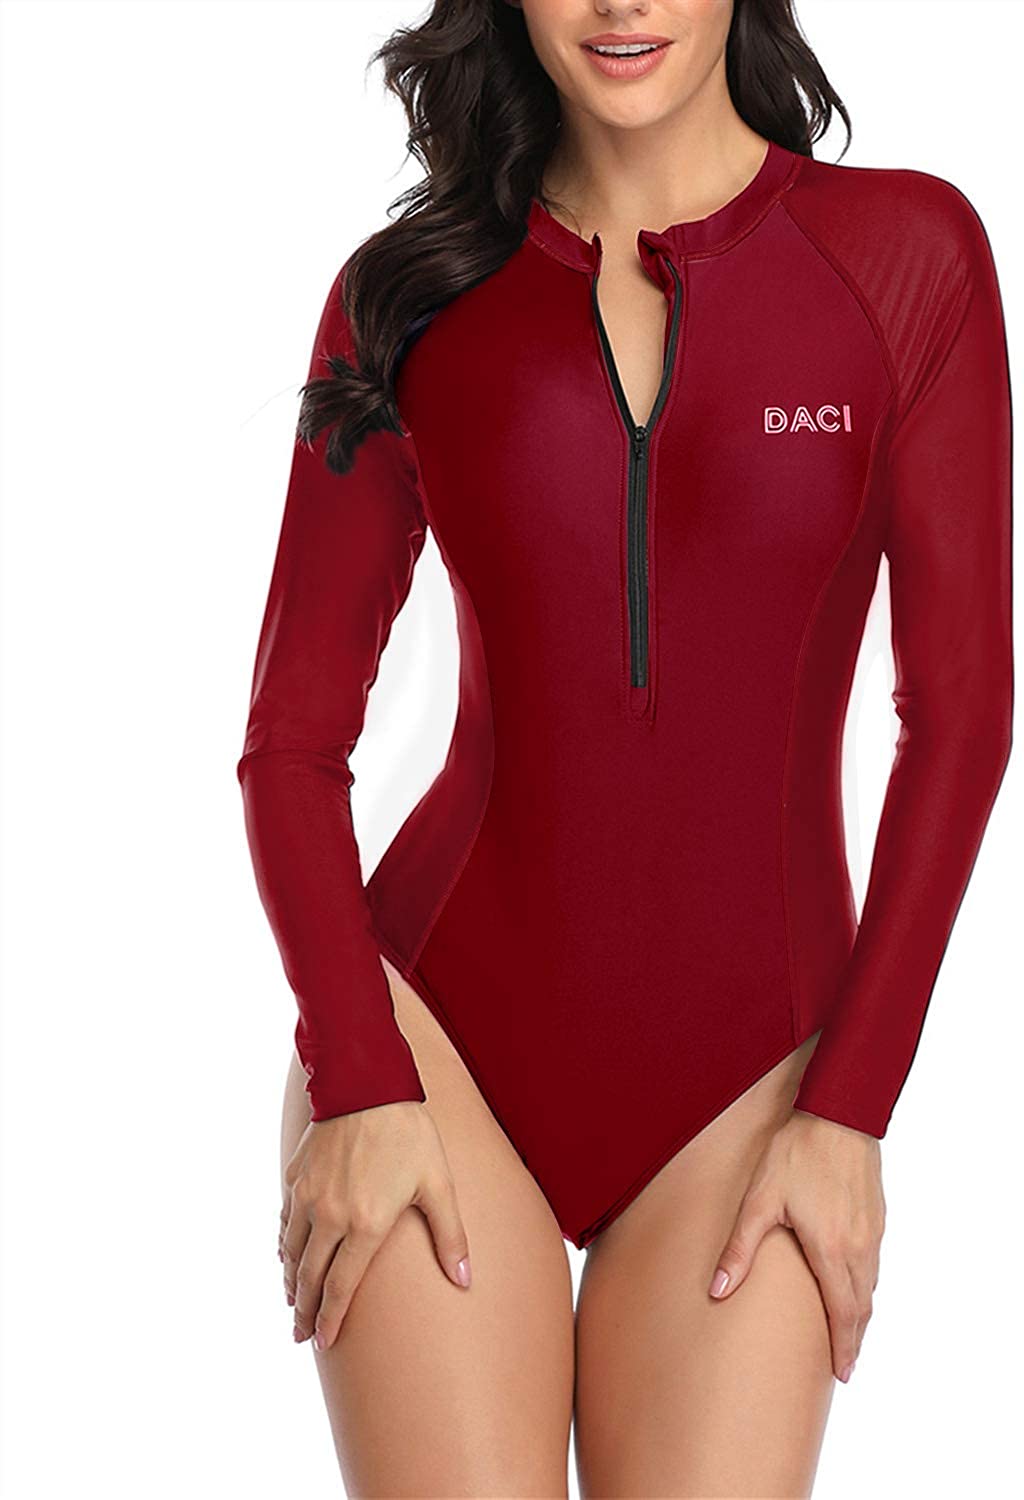 Daci Women 2 Piece Rash Guard Long Sleeve Zipper Bathing Suit with Bottom  Built in Bra Swimsuit UPF 50